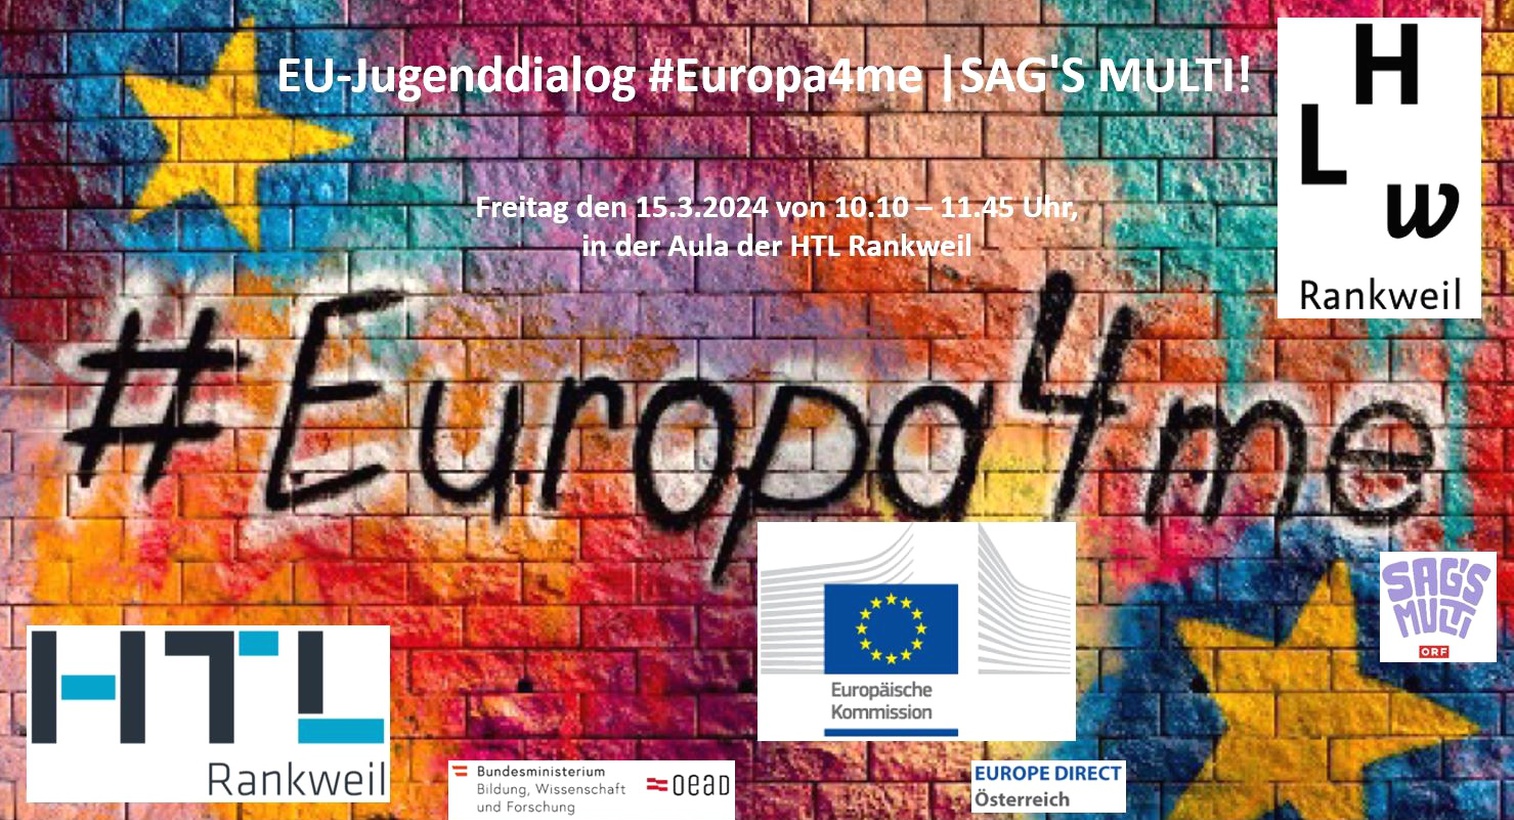 EU-Jugenddialog